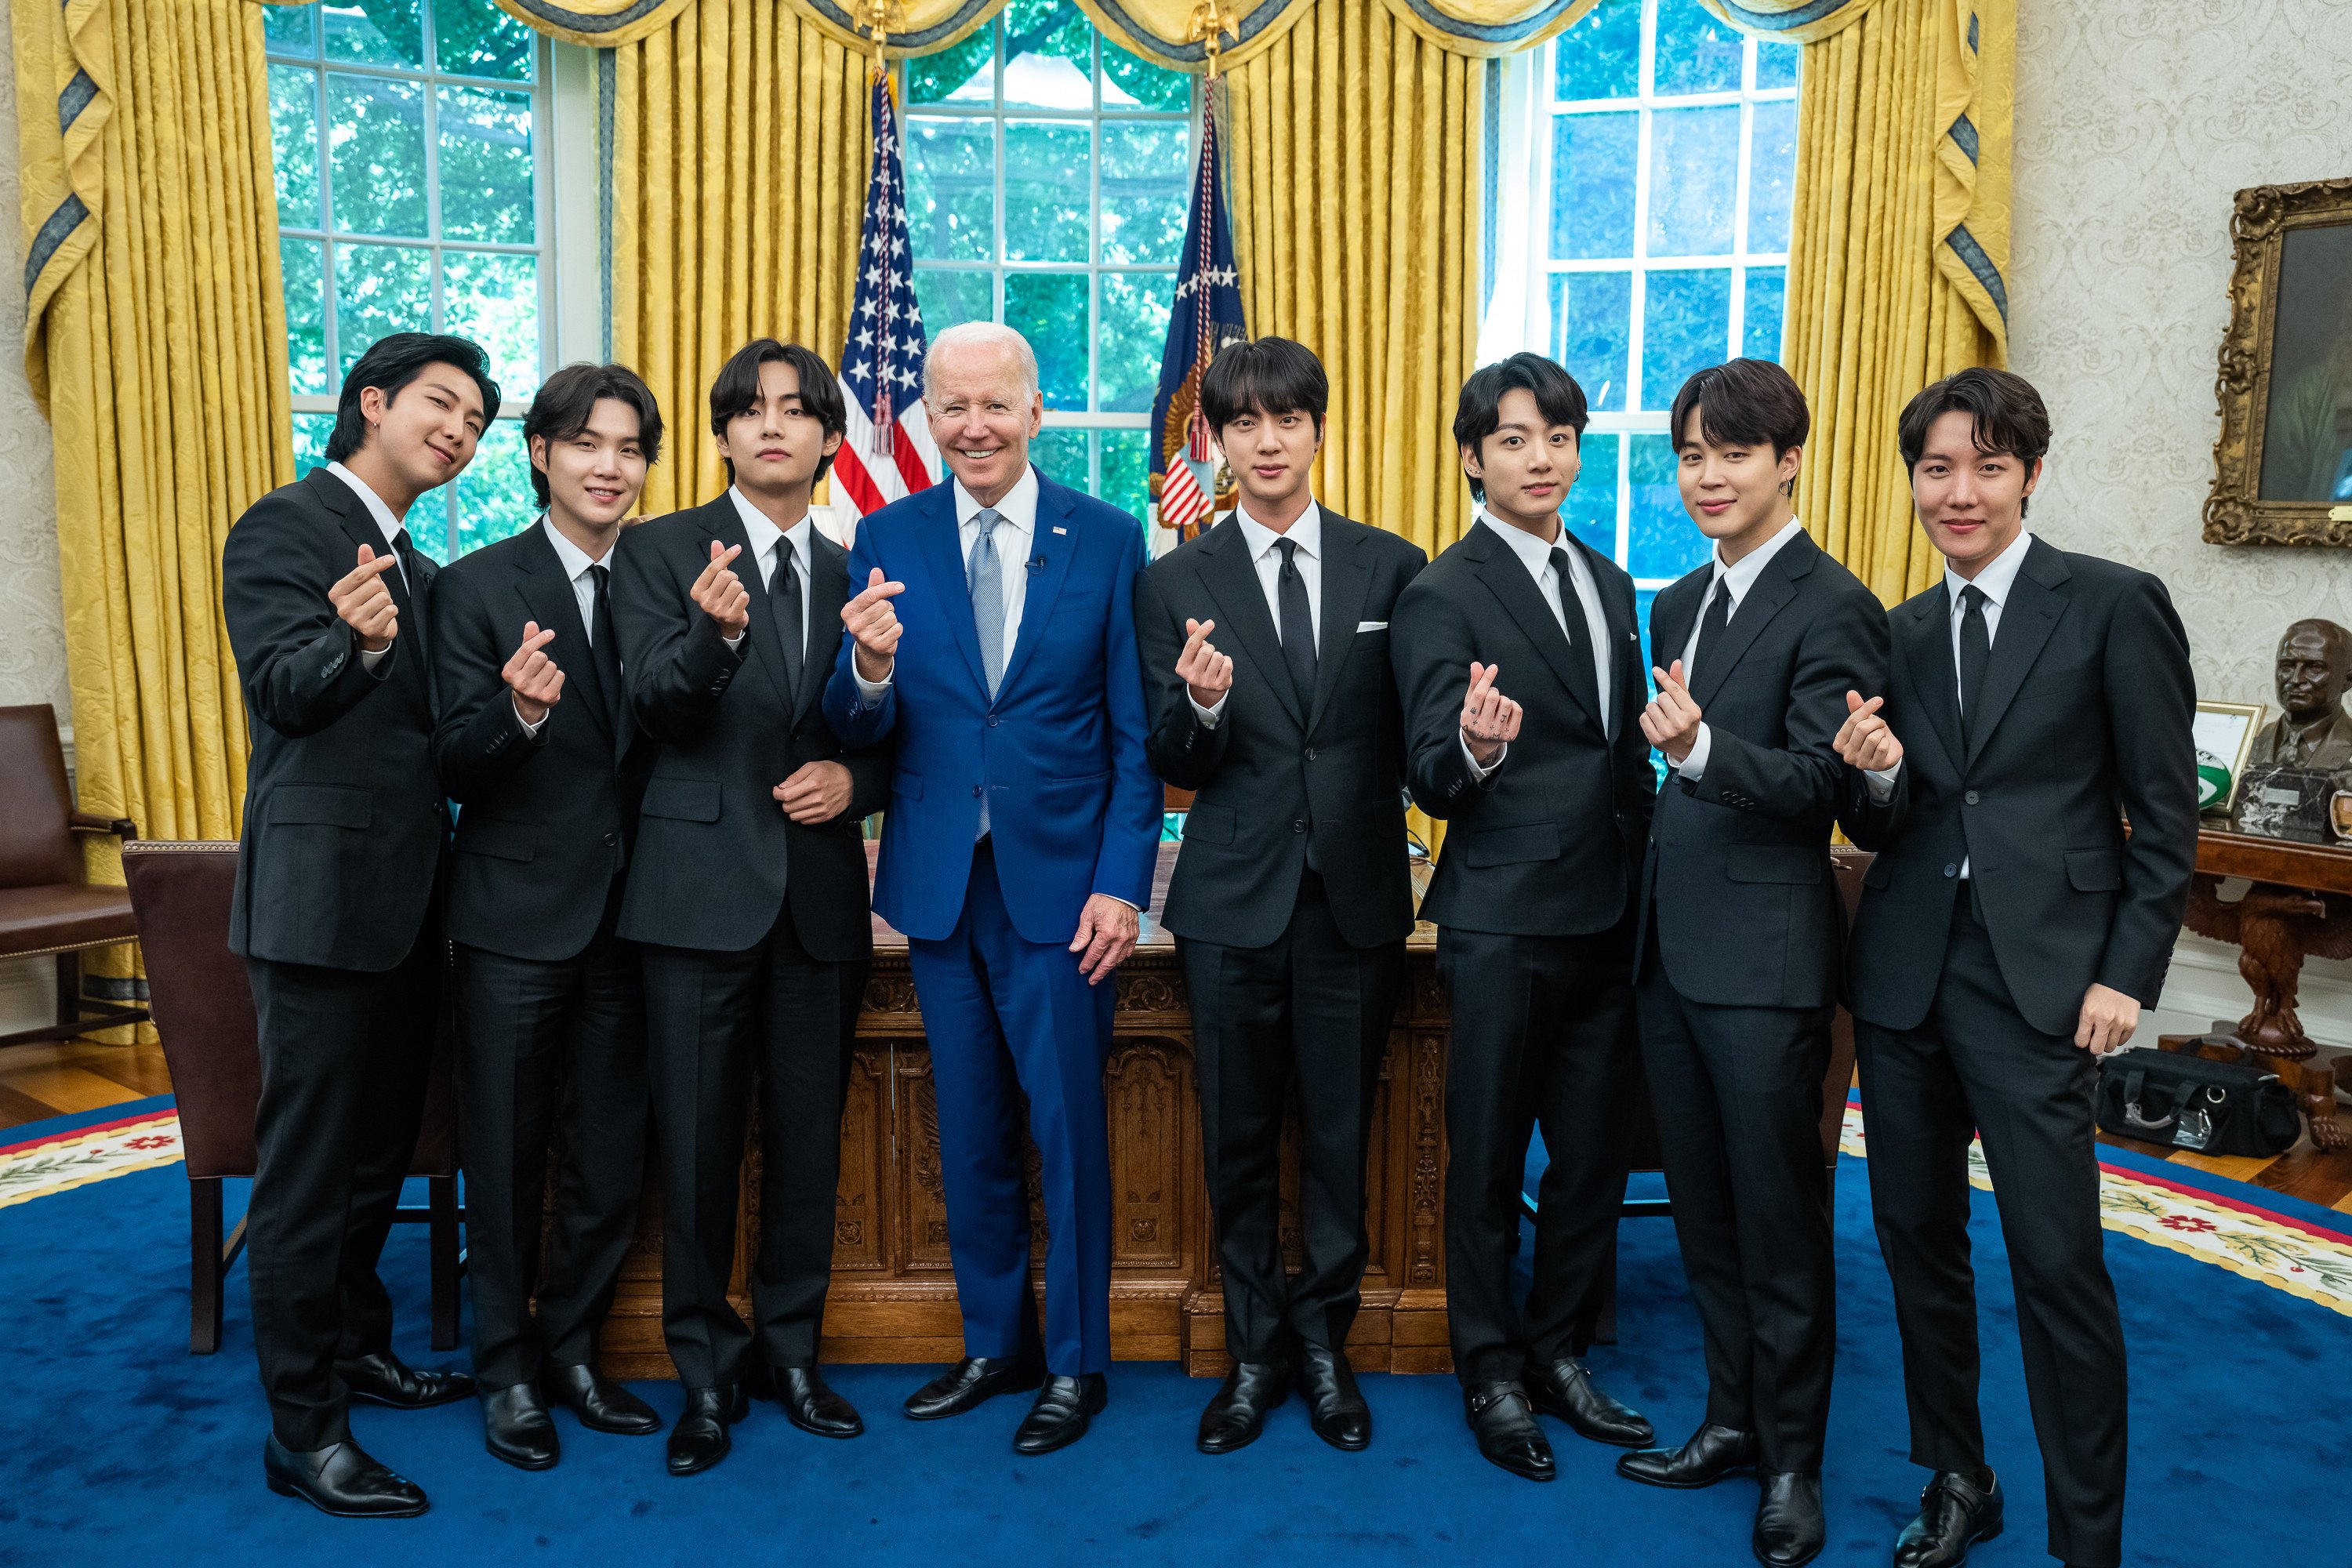 RM, Suga, V, Jin, Jungkook, Jimin, and J-Hope of BTS with President Joe Biden